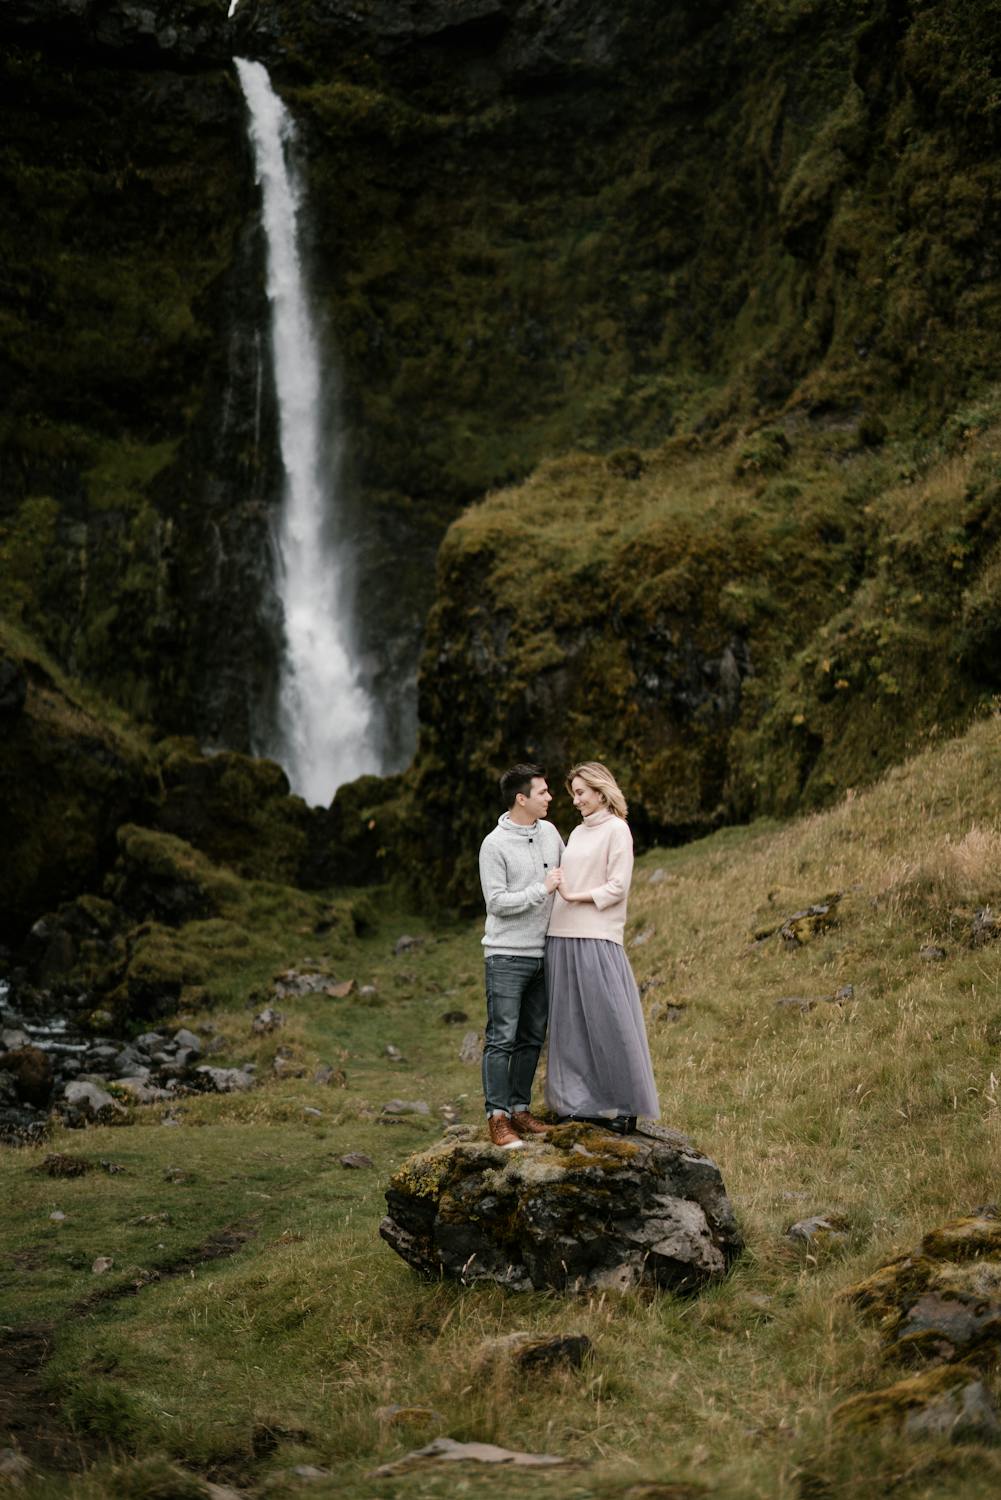 romantic-couple-bonding-against-scenic-waterfall-free-stock-photo